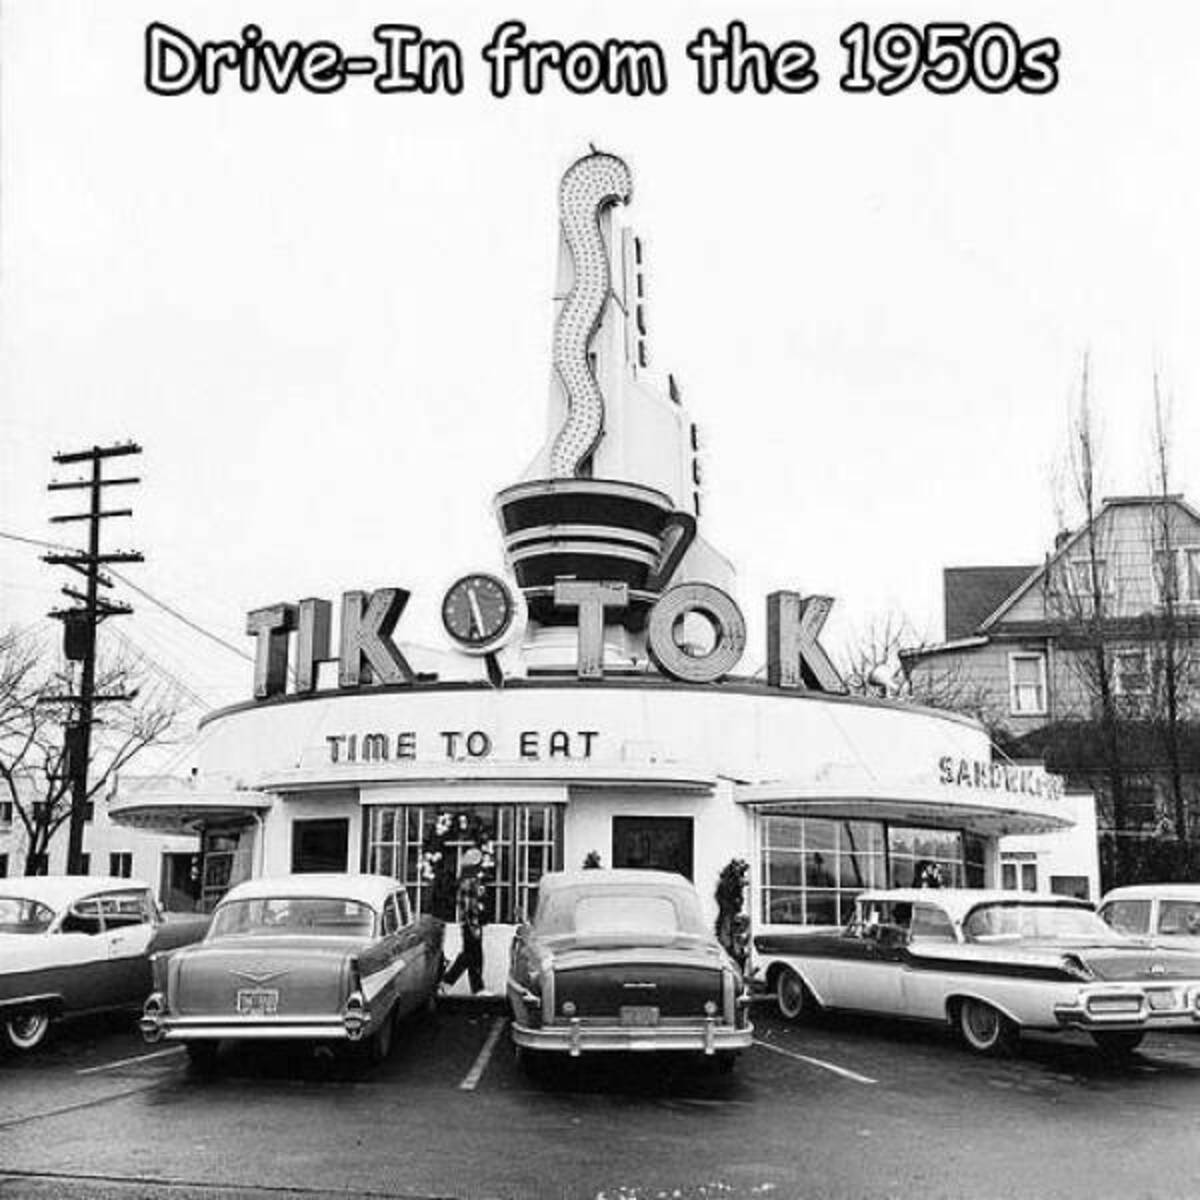 tik tok drive in portland - DriveIn from the 1950s Tikotok Time To Eat Sandekar